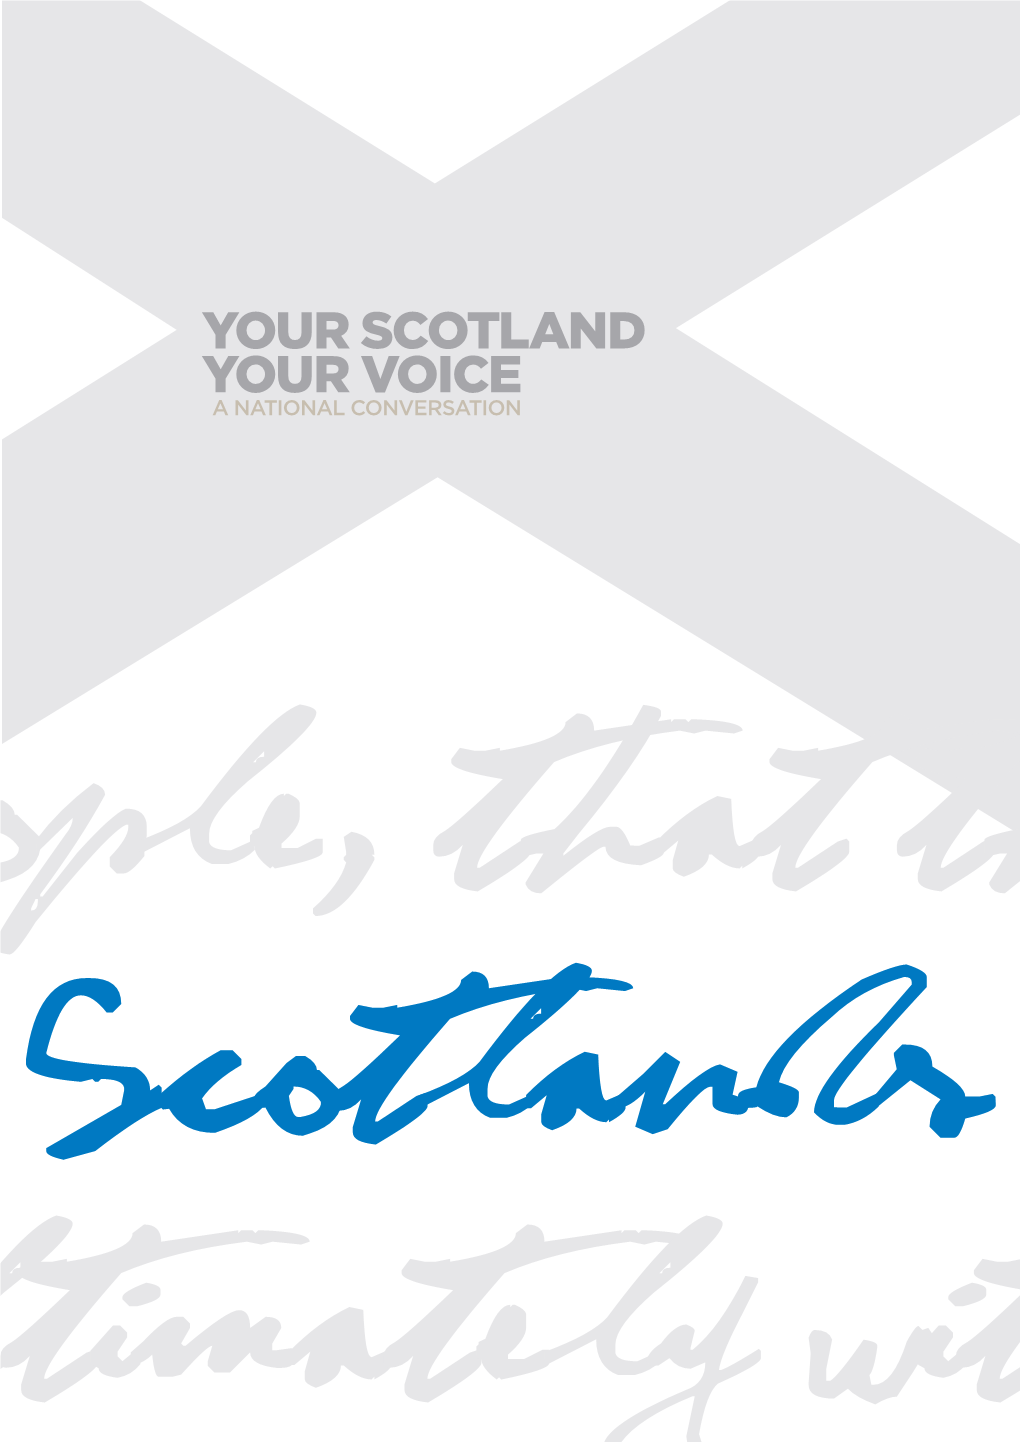 Your Scotland Your Voice: a National Conversation